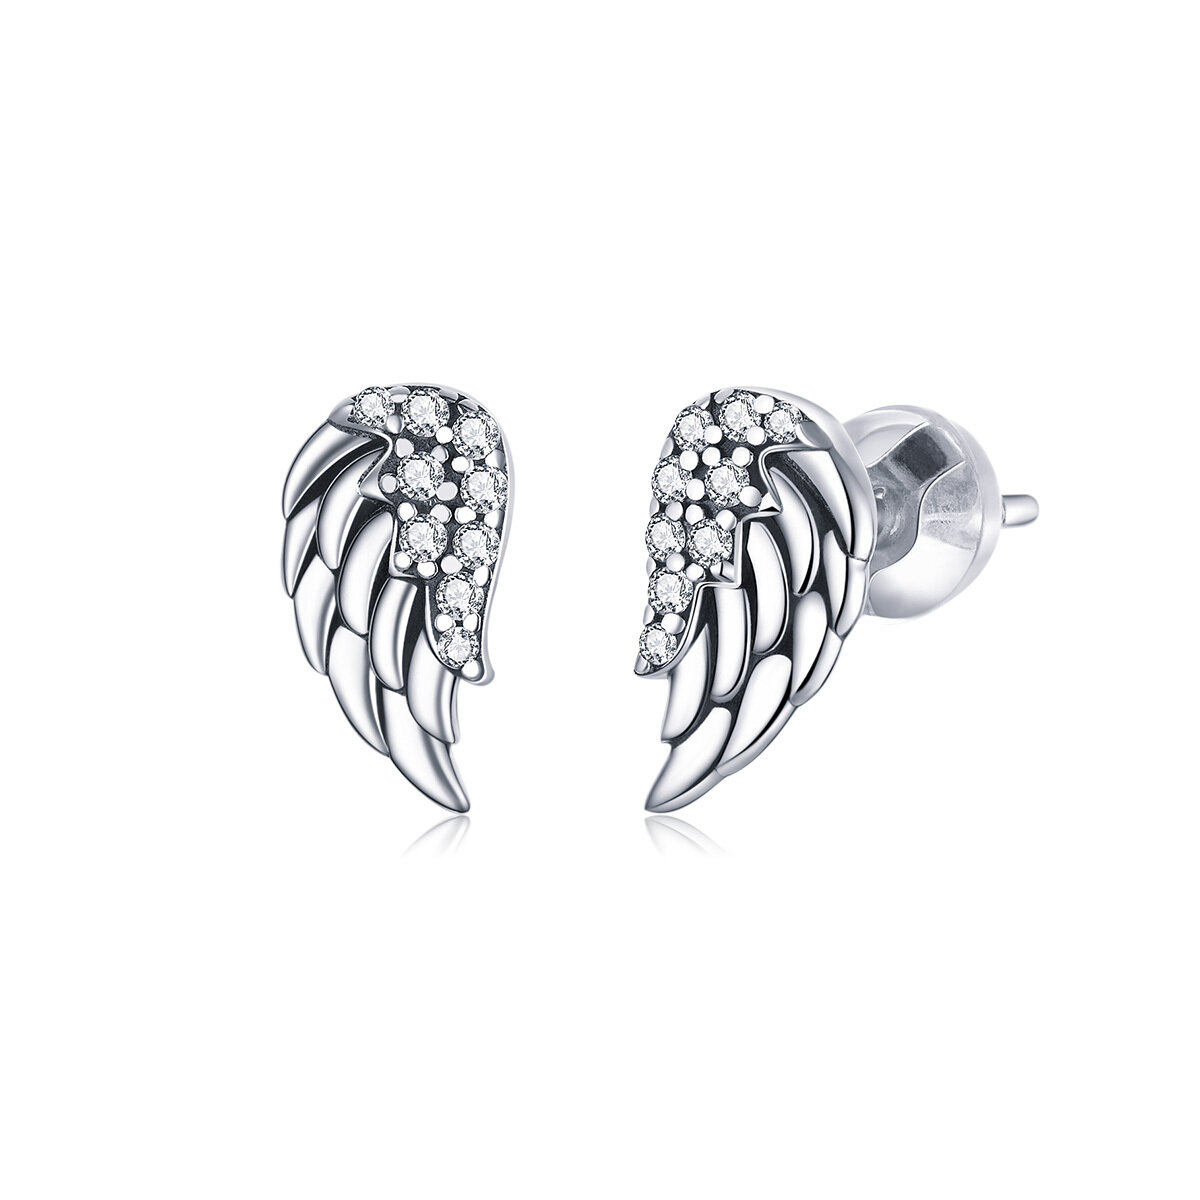 GemKing SCE882 Wings-silver silicone stud earrings S925 Sterling Silver Earring